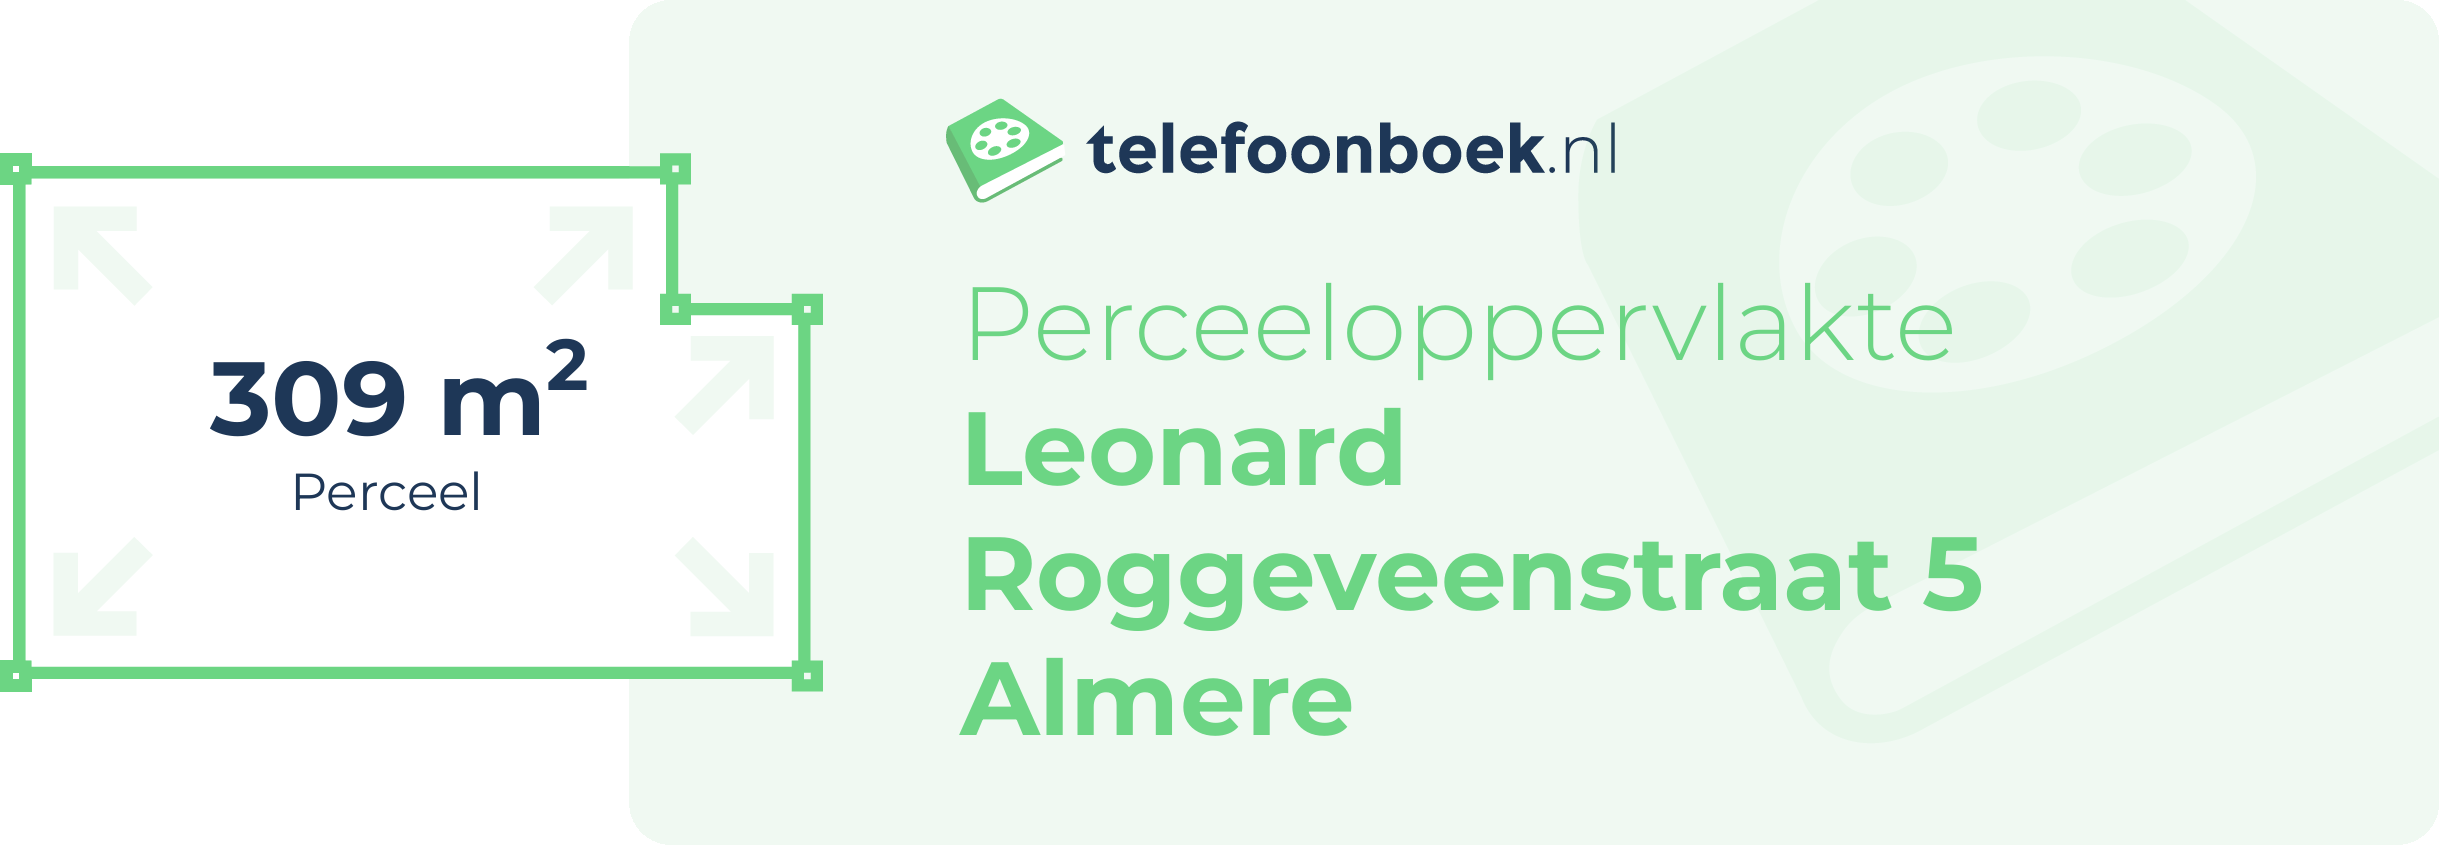 Perceeloppervlakte Leonard Roggeveenstraat 5 Almere